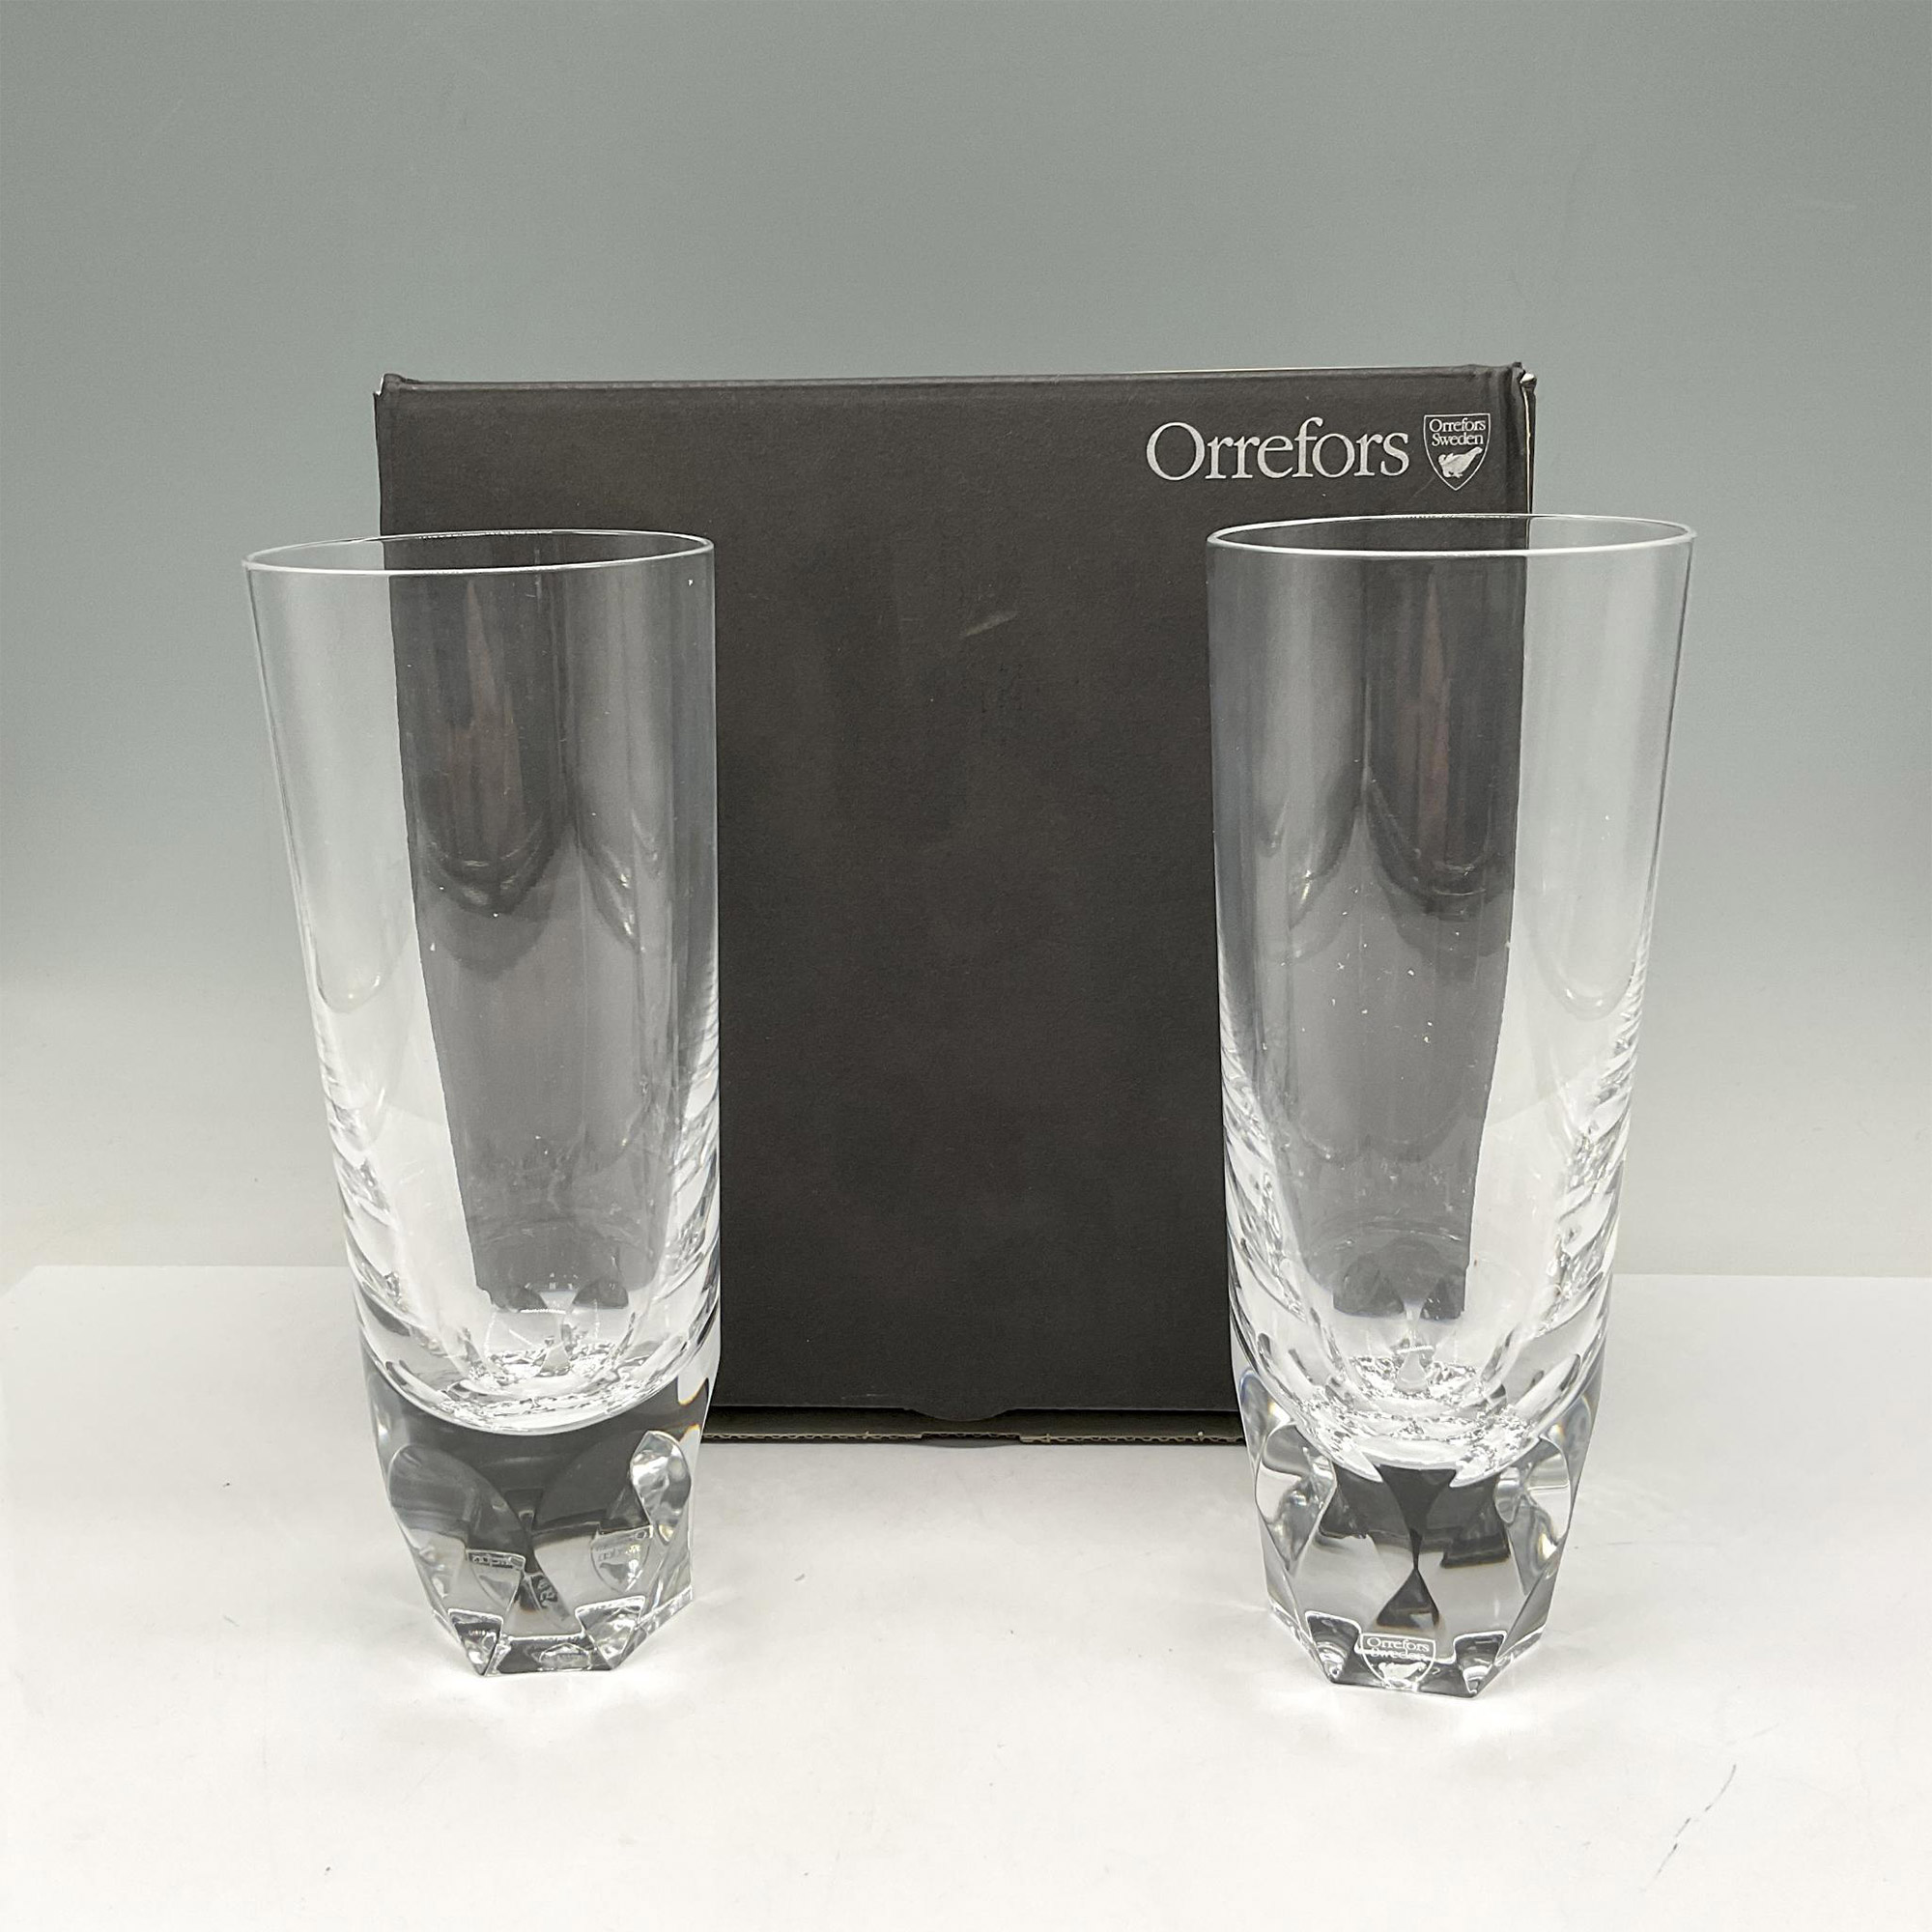 Orrefors Crystal Highball Glasses, Carat - Image 4 of 4